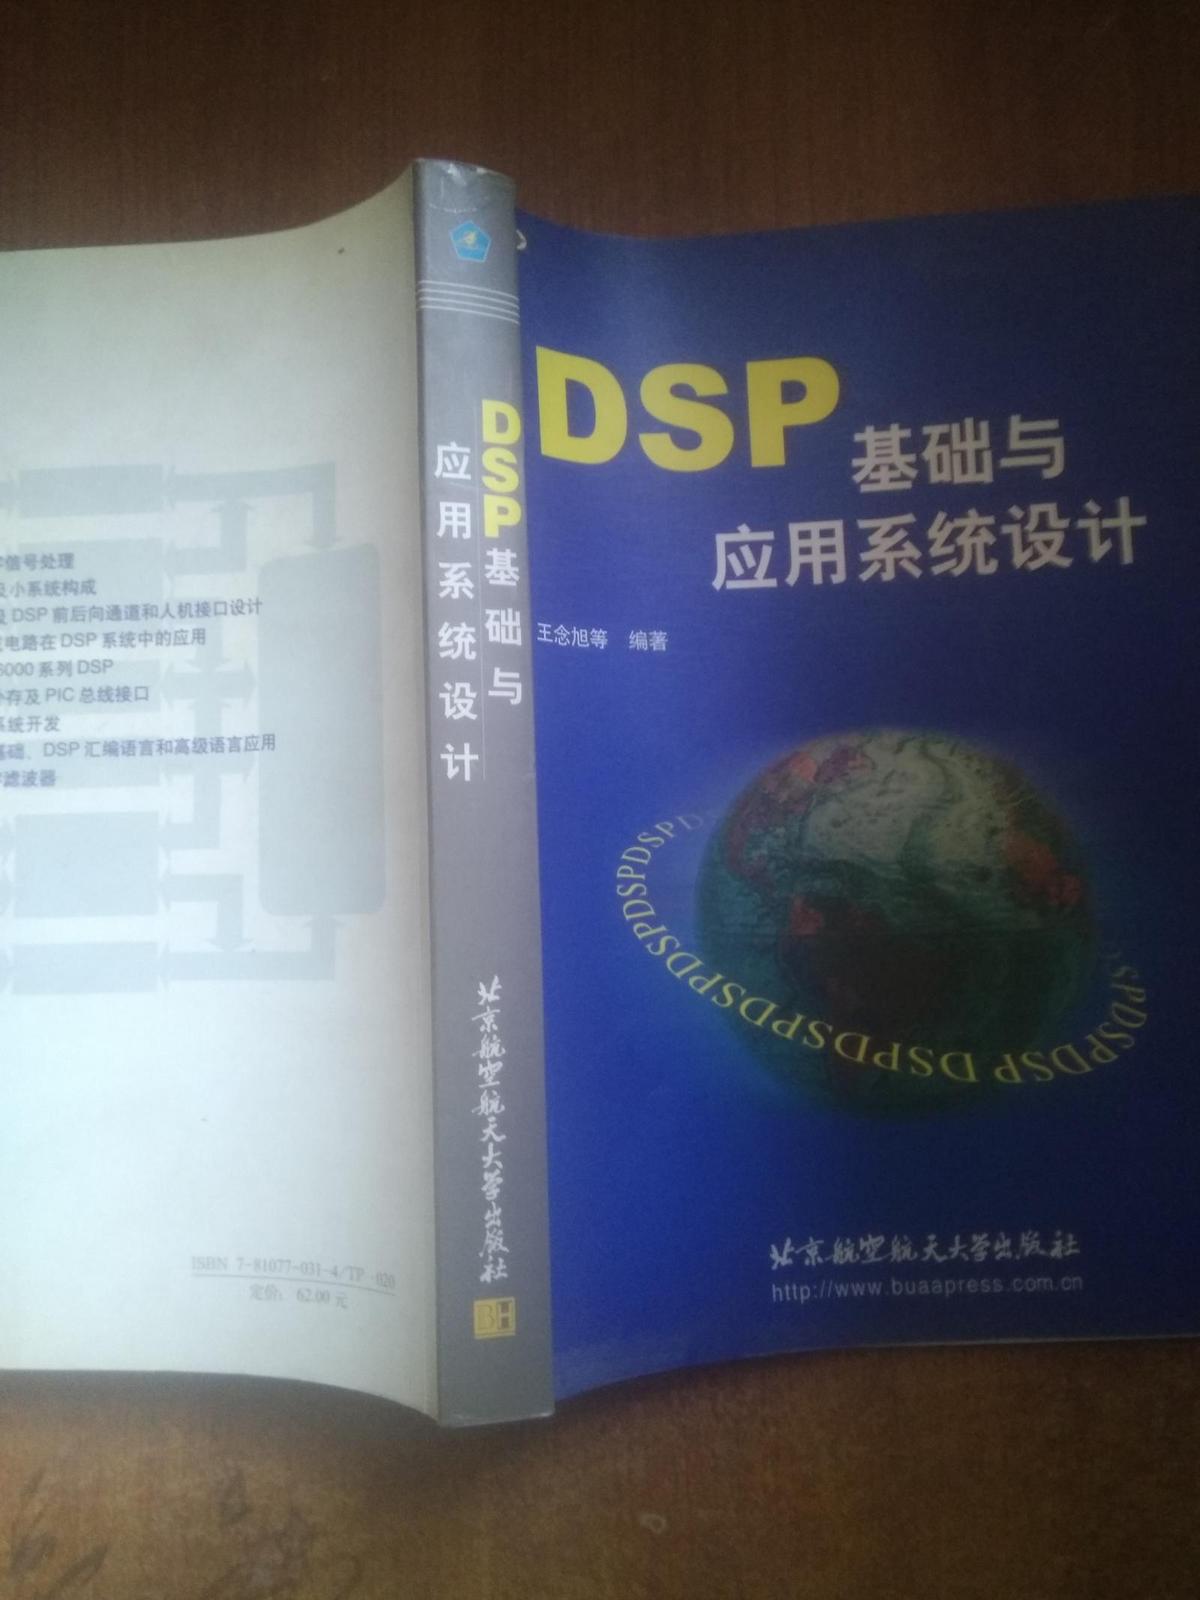 DSP基础与实用系统设计